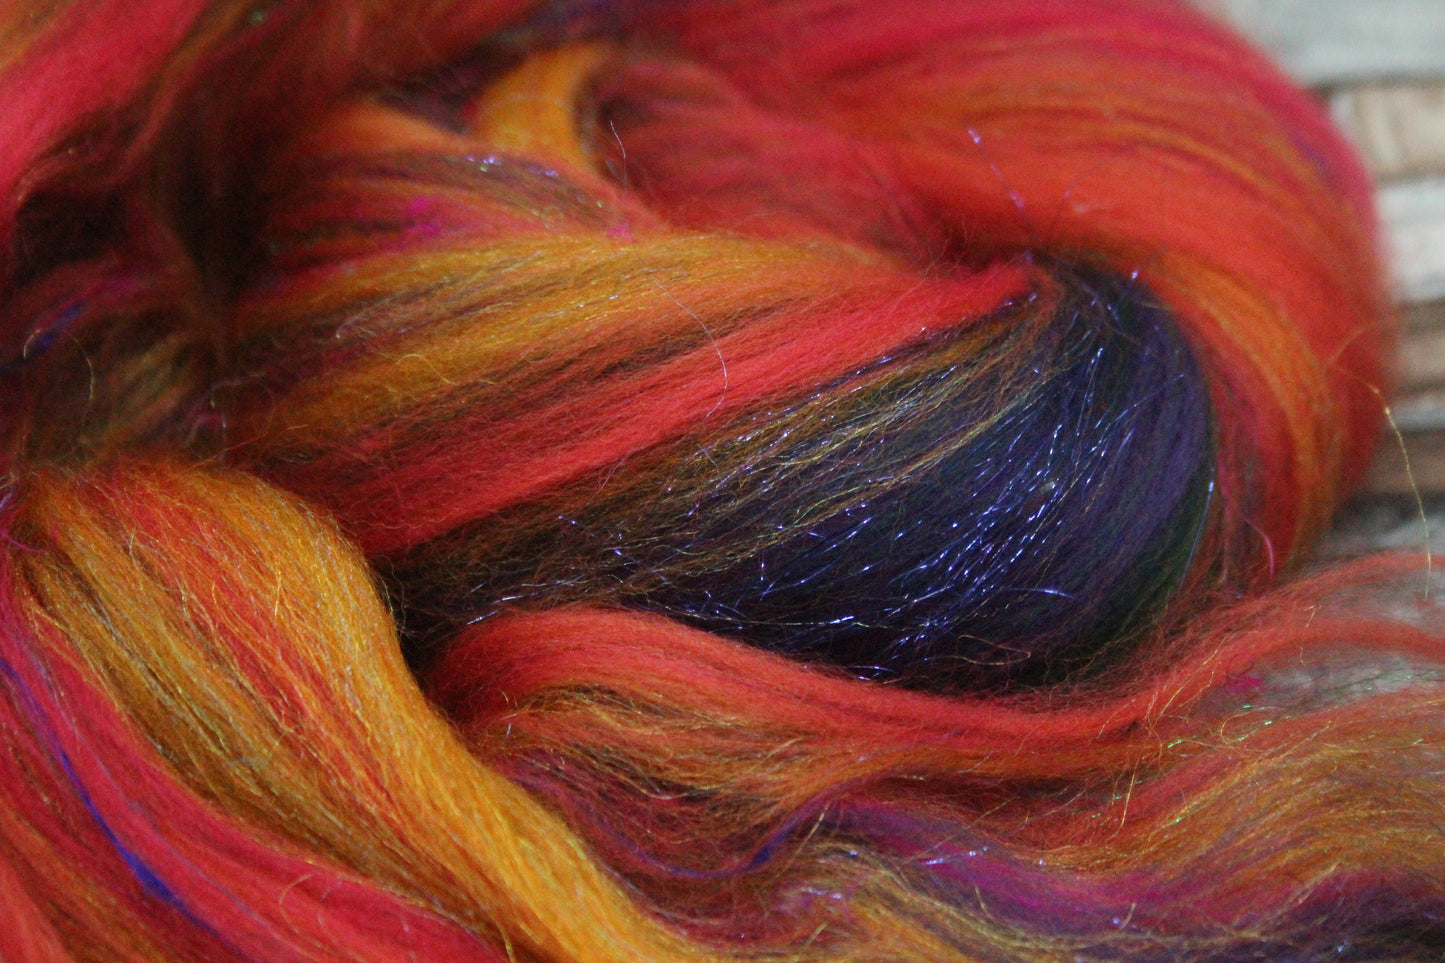 Merino Wool Blend - Green Orange Pink - 23 grams / 0.8 oz  - Fibre for felting, weaving or spinning